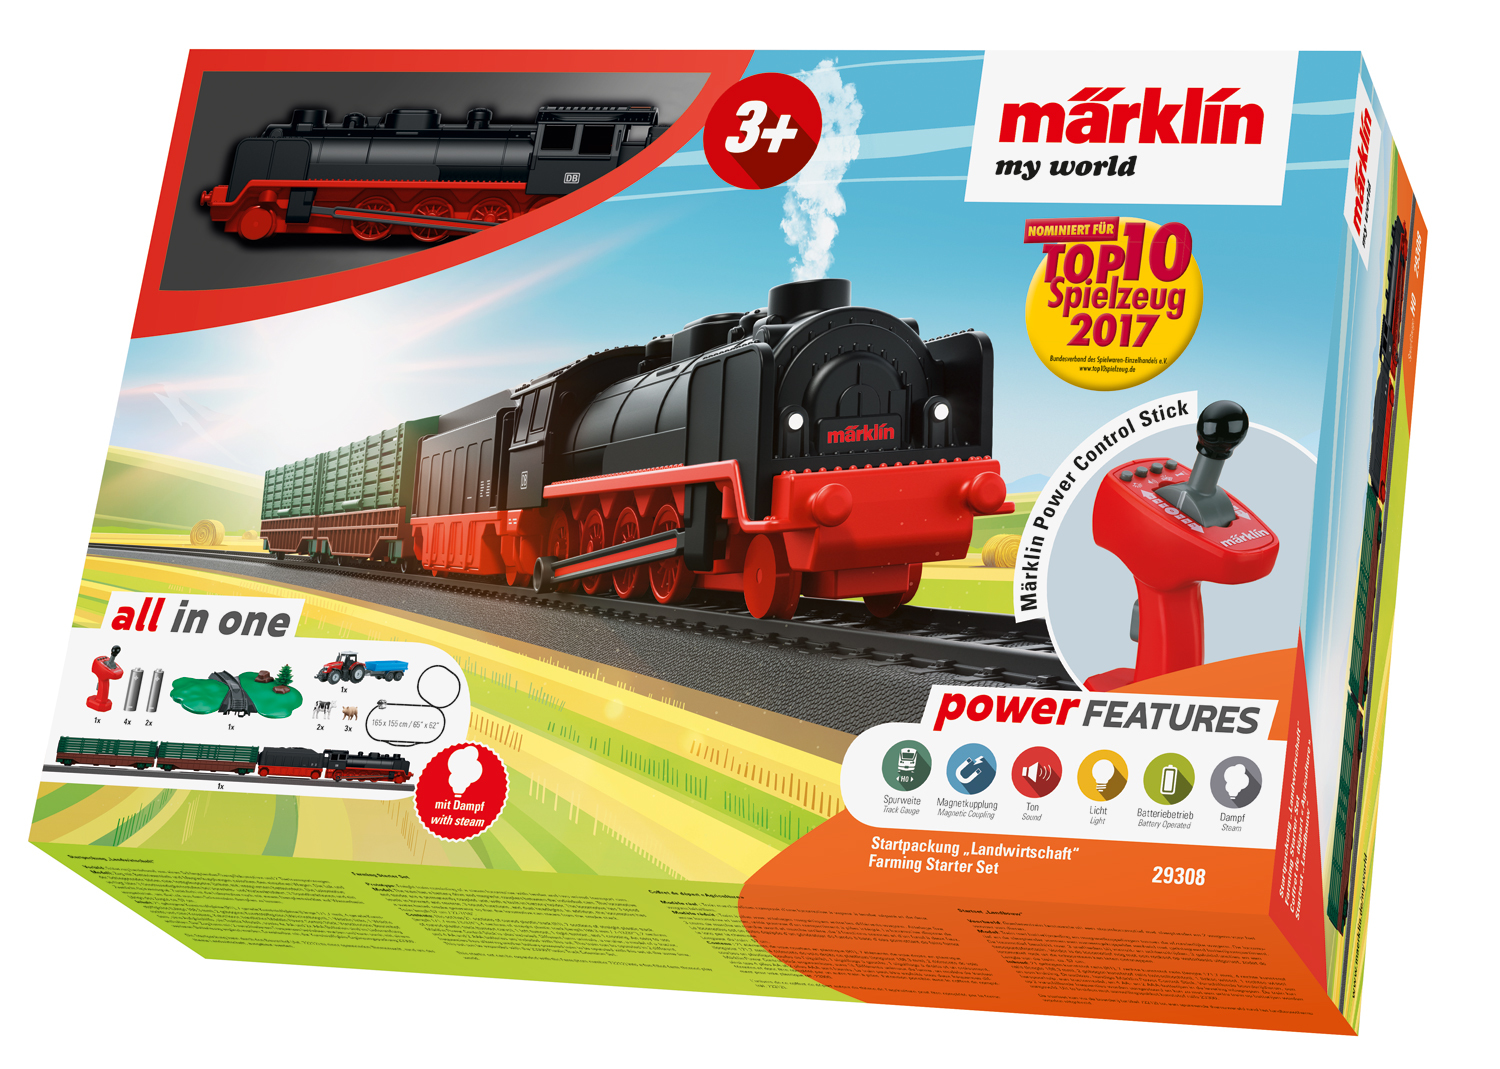 marklin train set